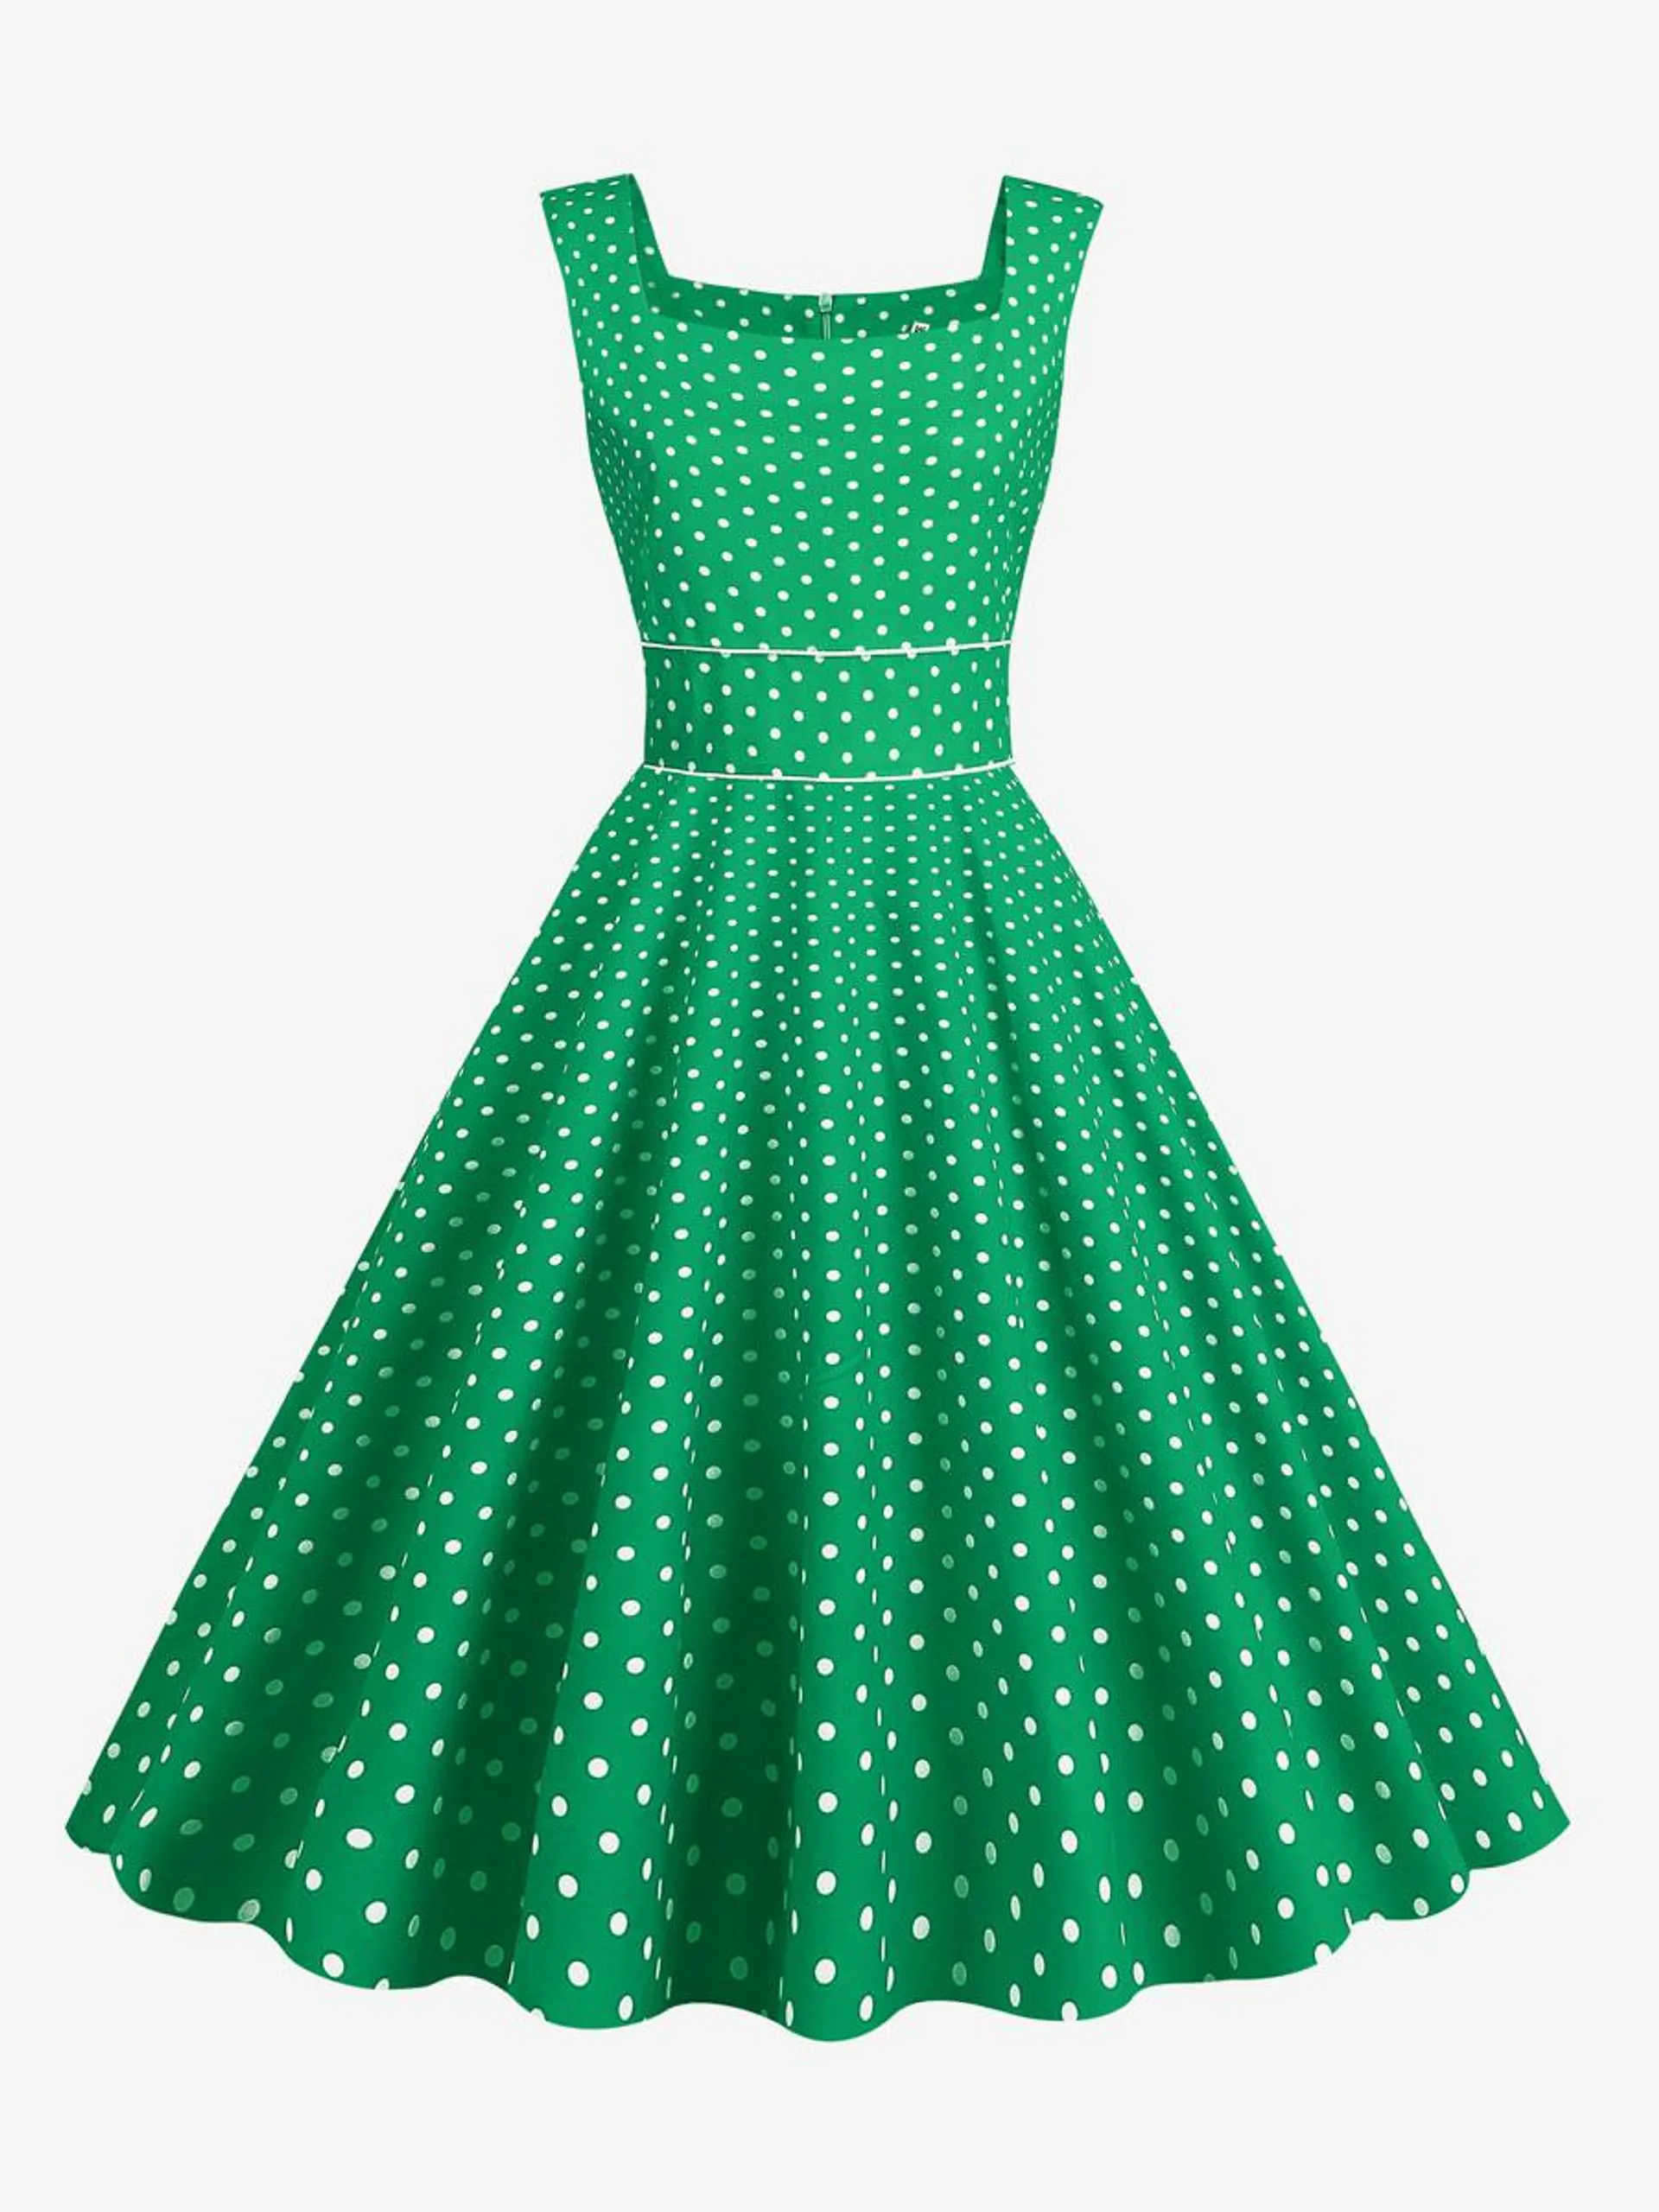 Retro Dress Green Polka Dot 1950s Audrey Hepburn Style Layered Sleeveless Square Neck Medium Rockabilly Dress